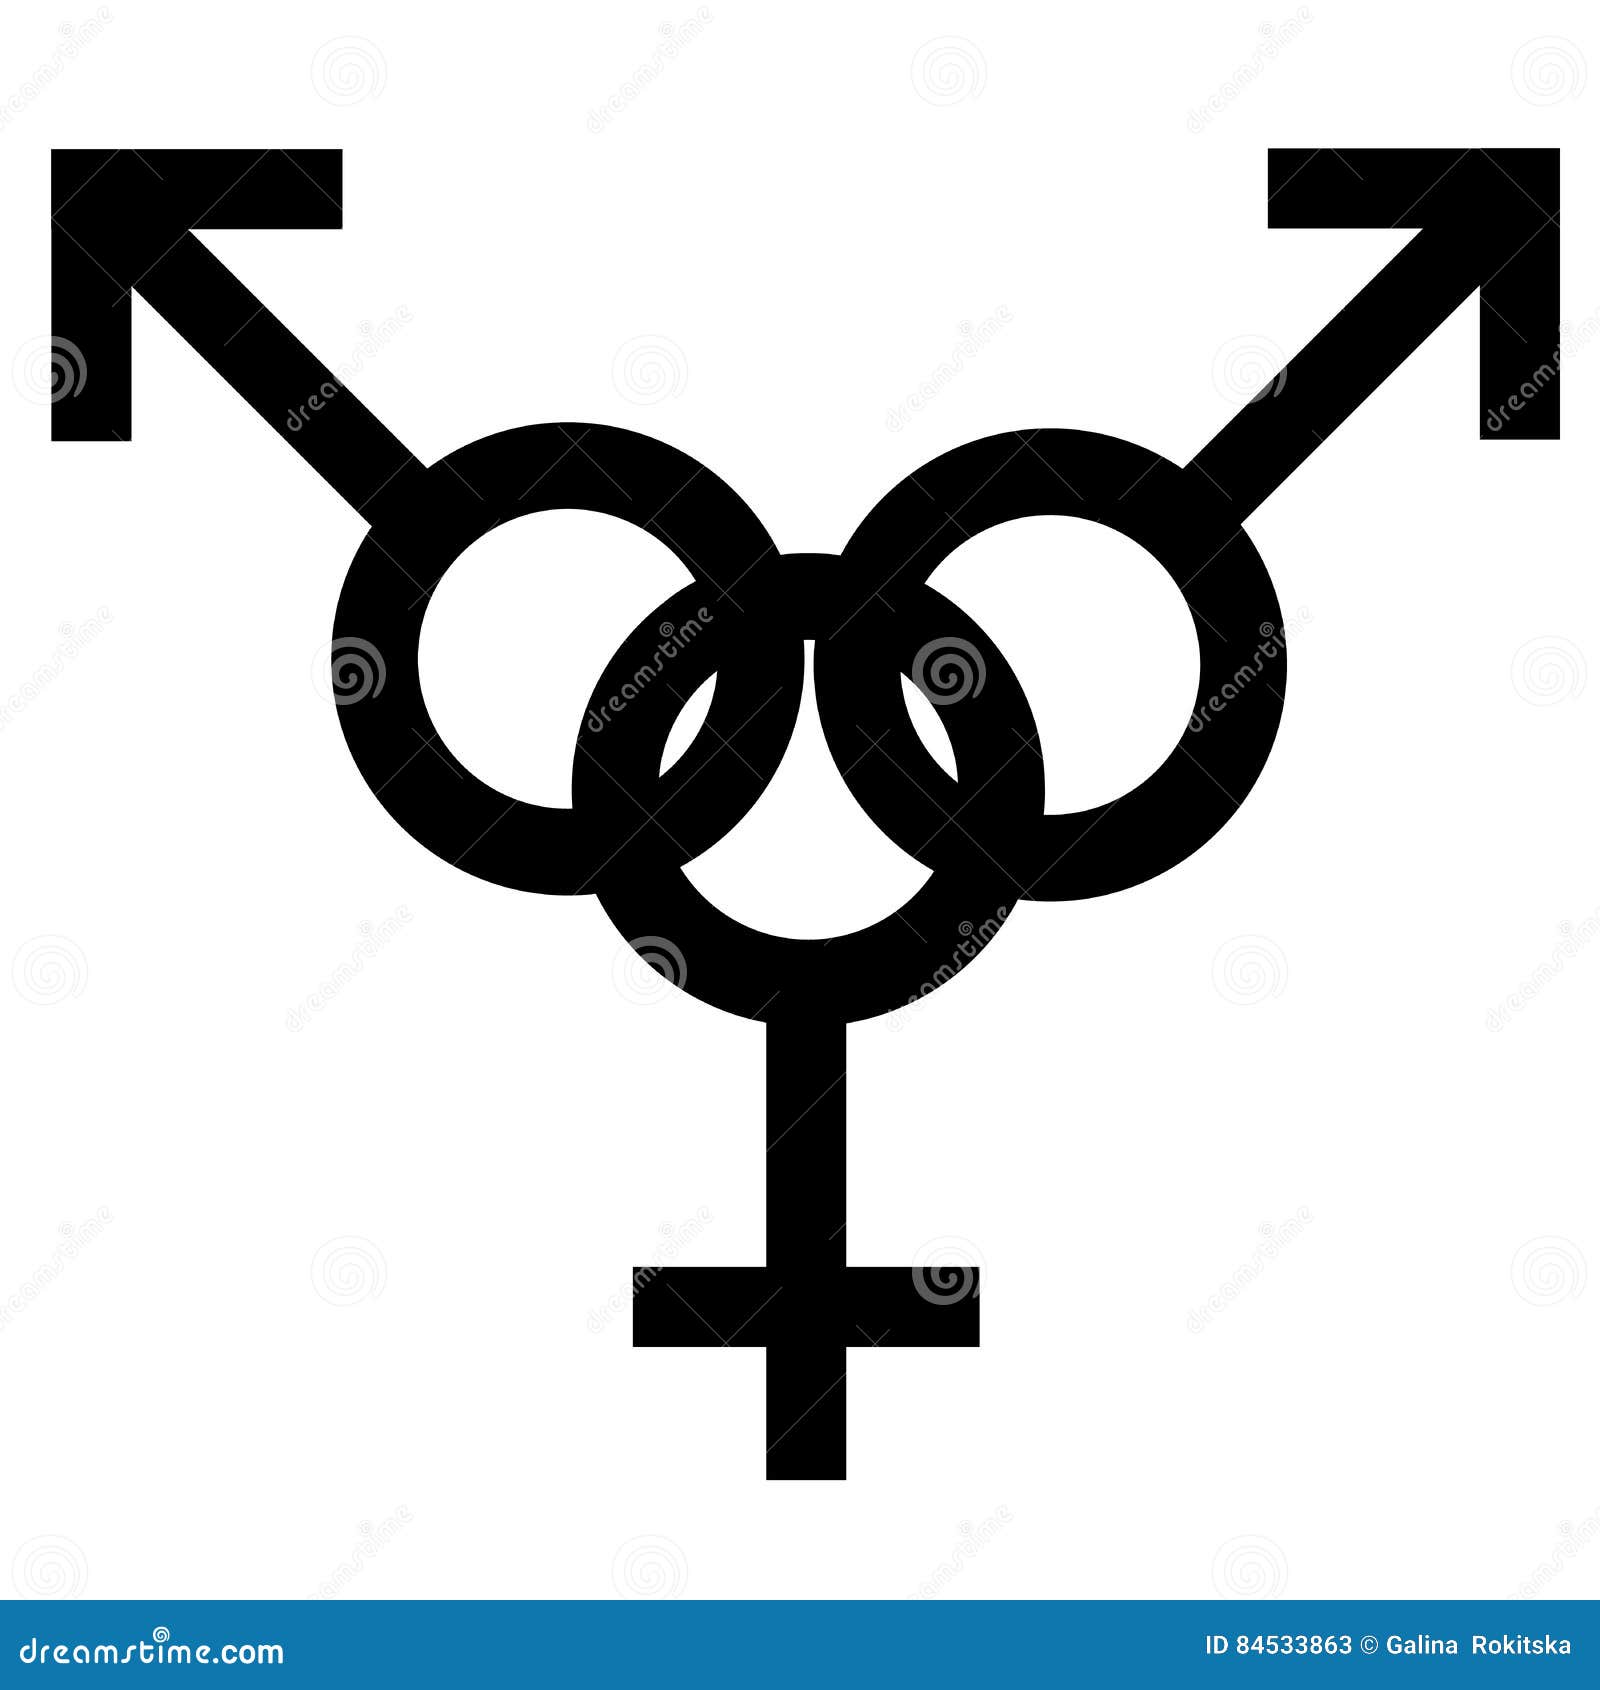 Sex Black Symbol. Gender Man and Woman Connected Symbol image